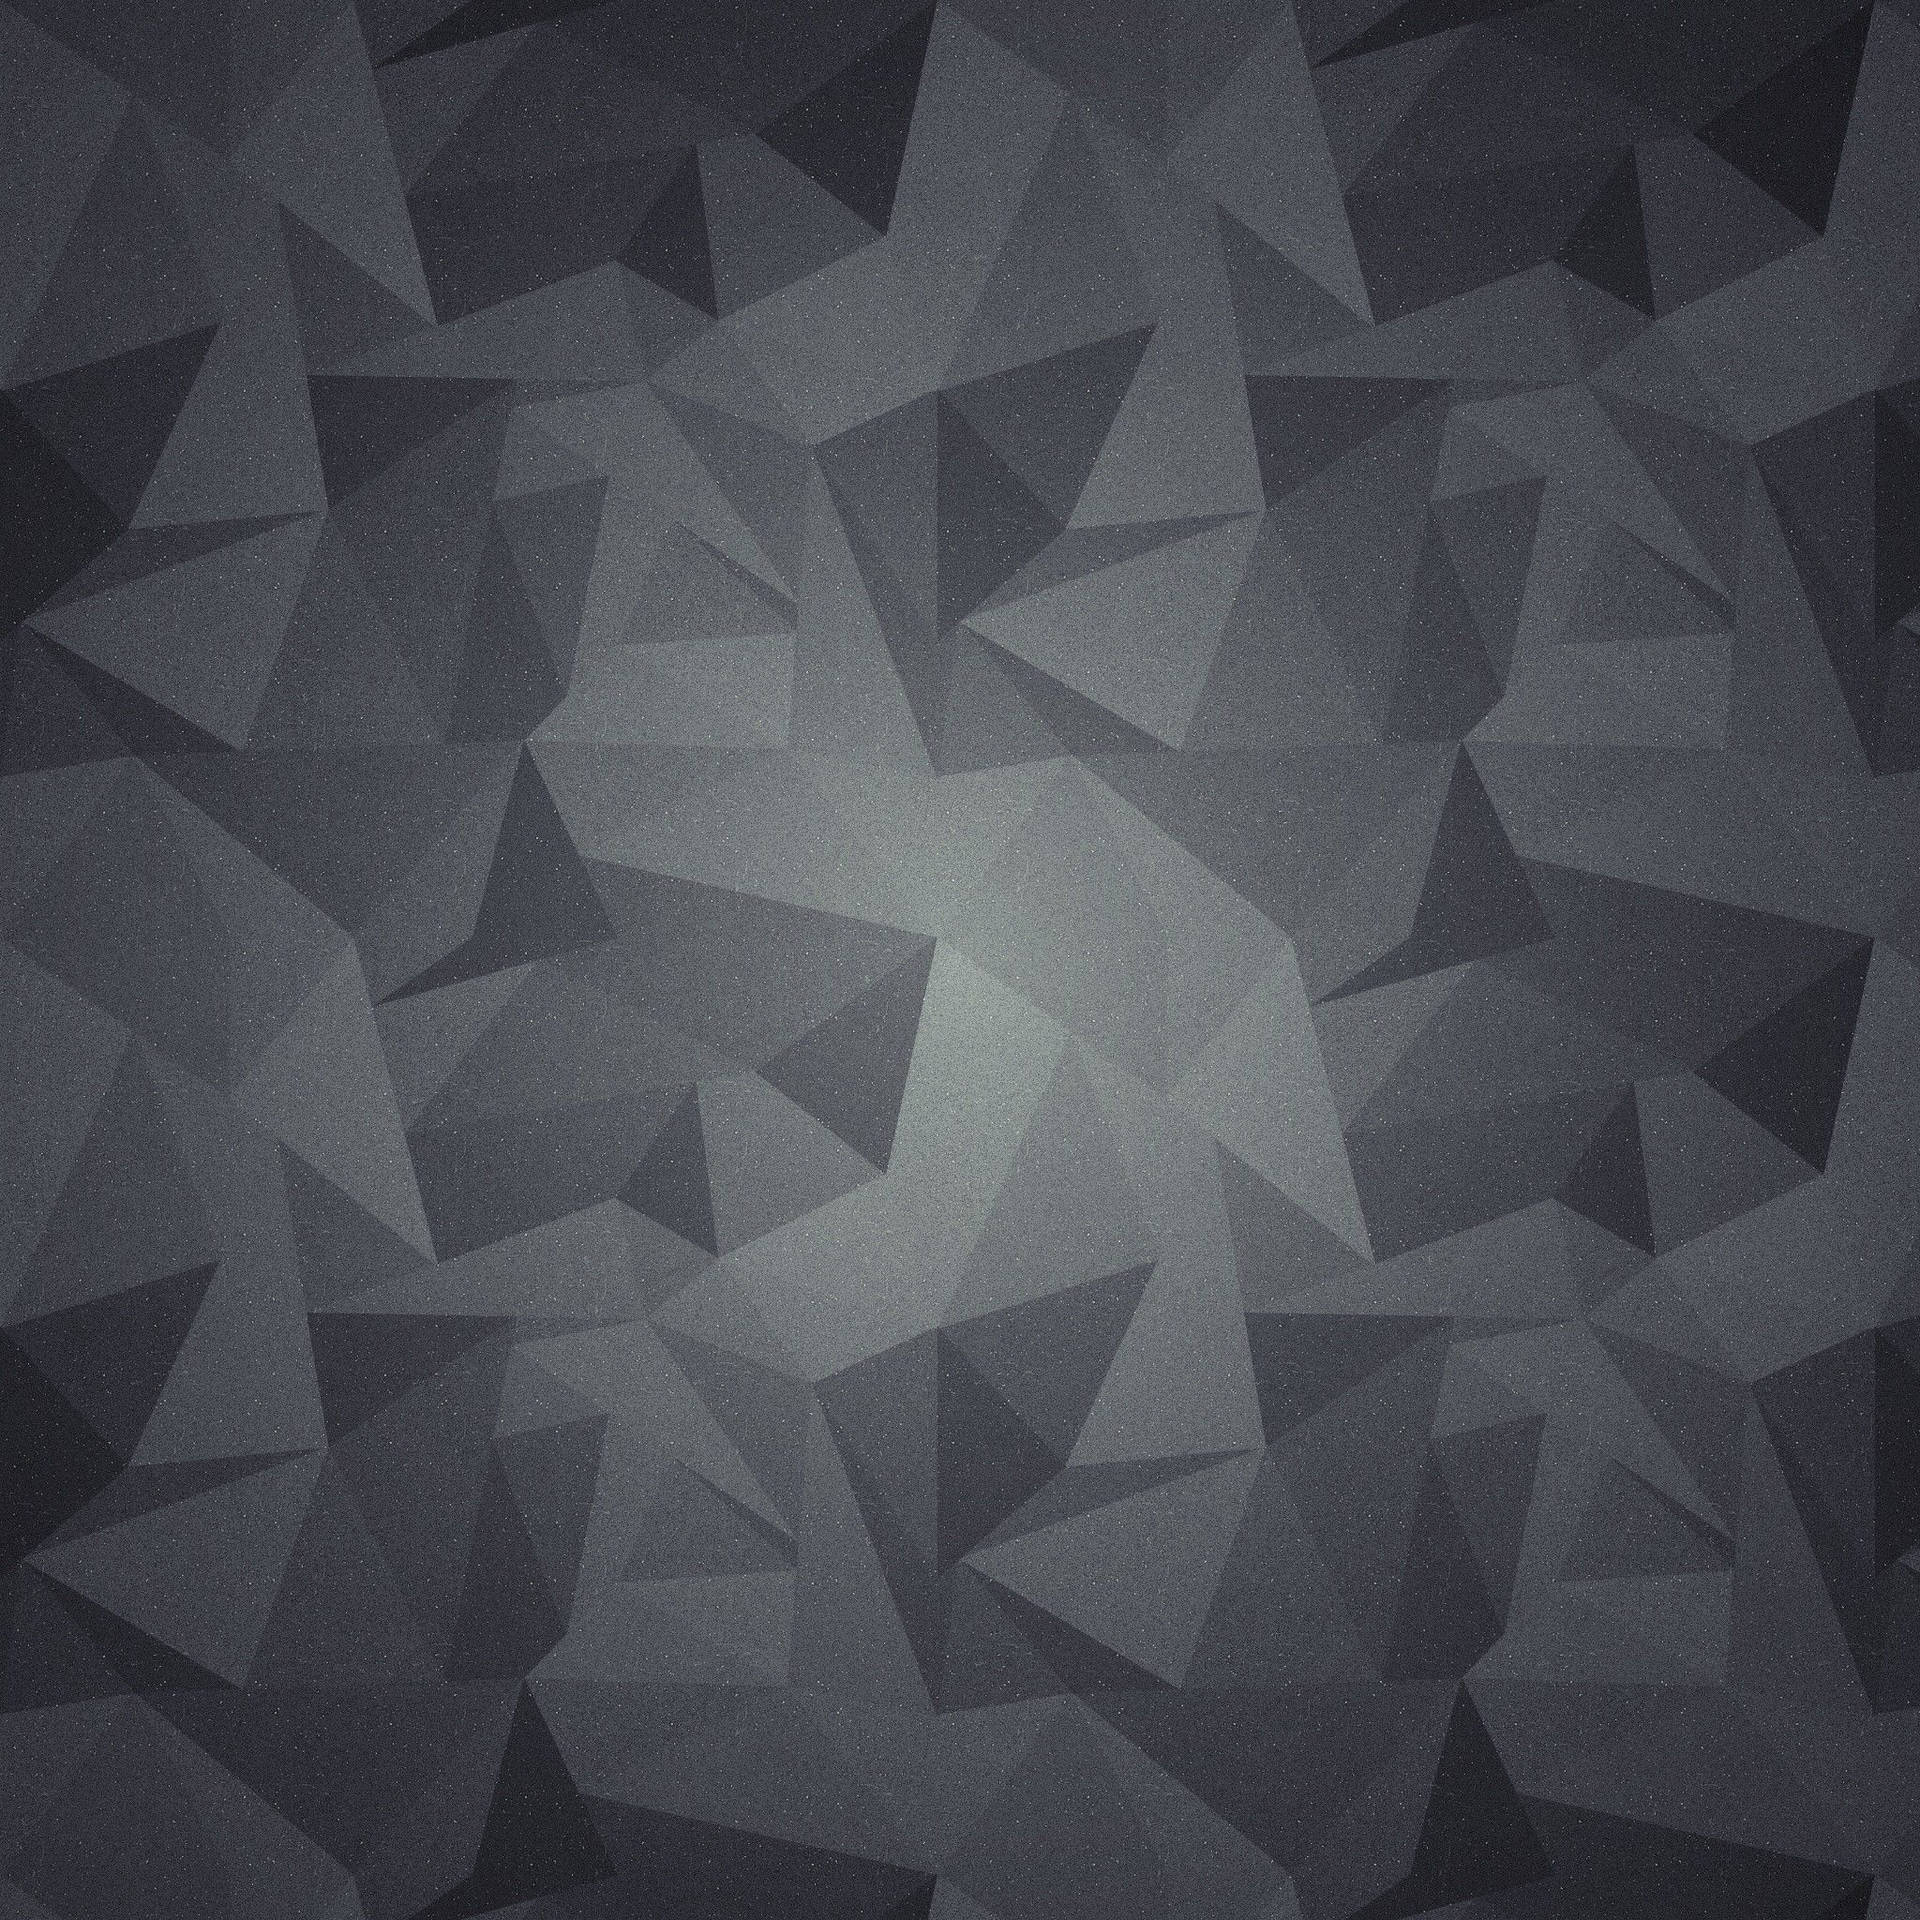 Grey Polygons Ipad Air 4 Background